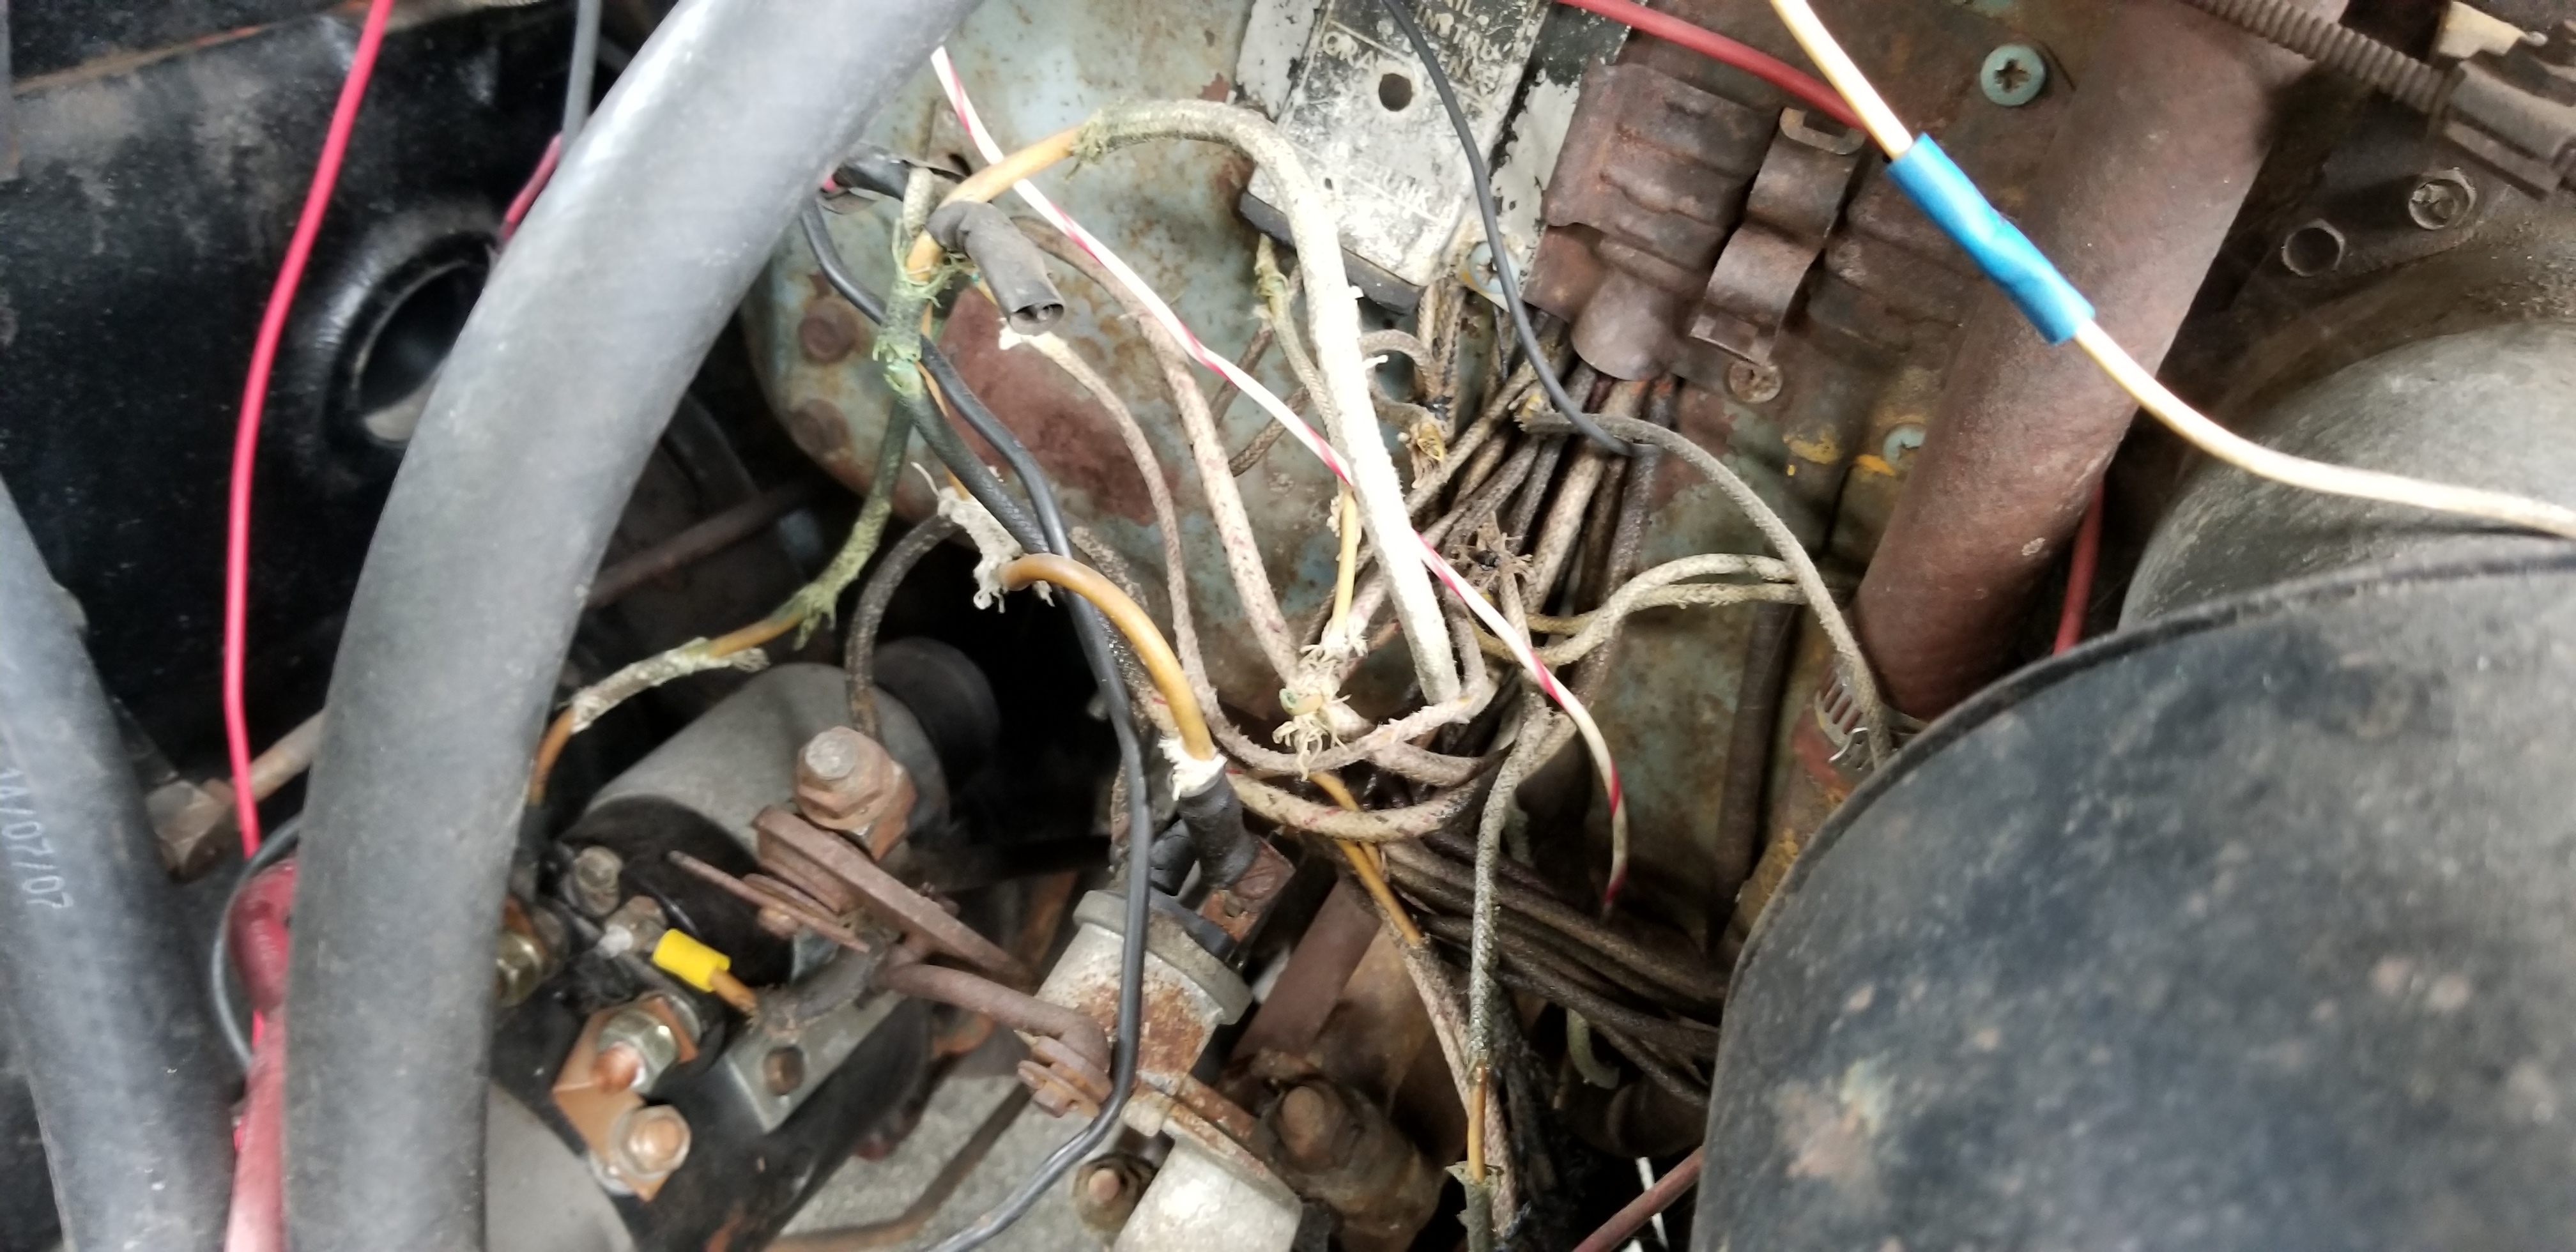 Bad wiring